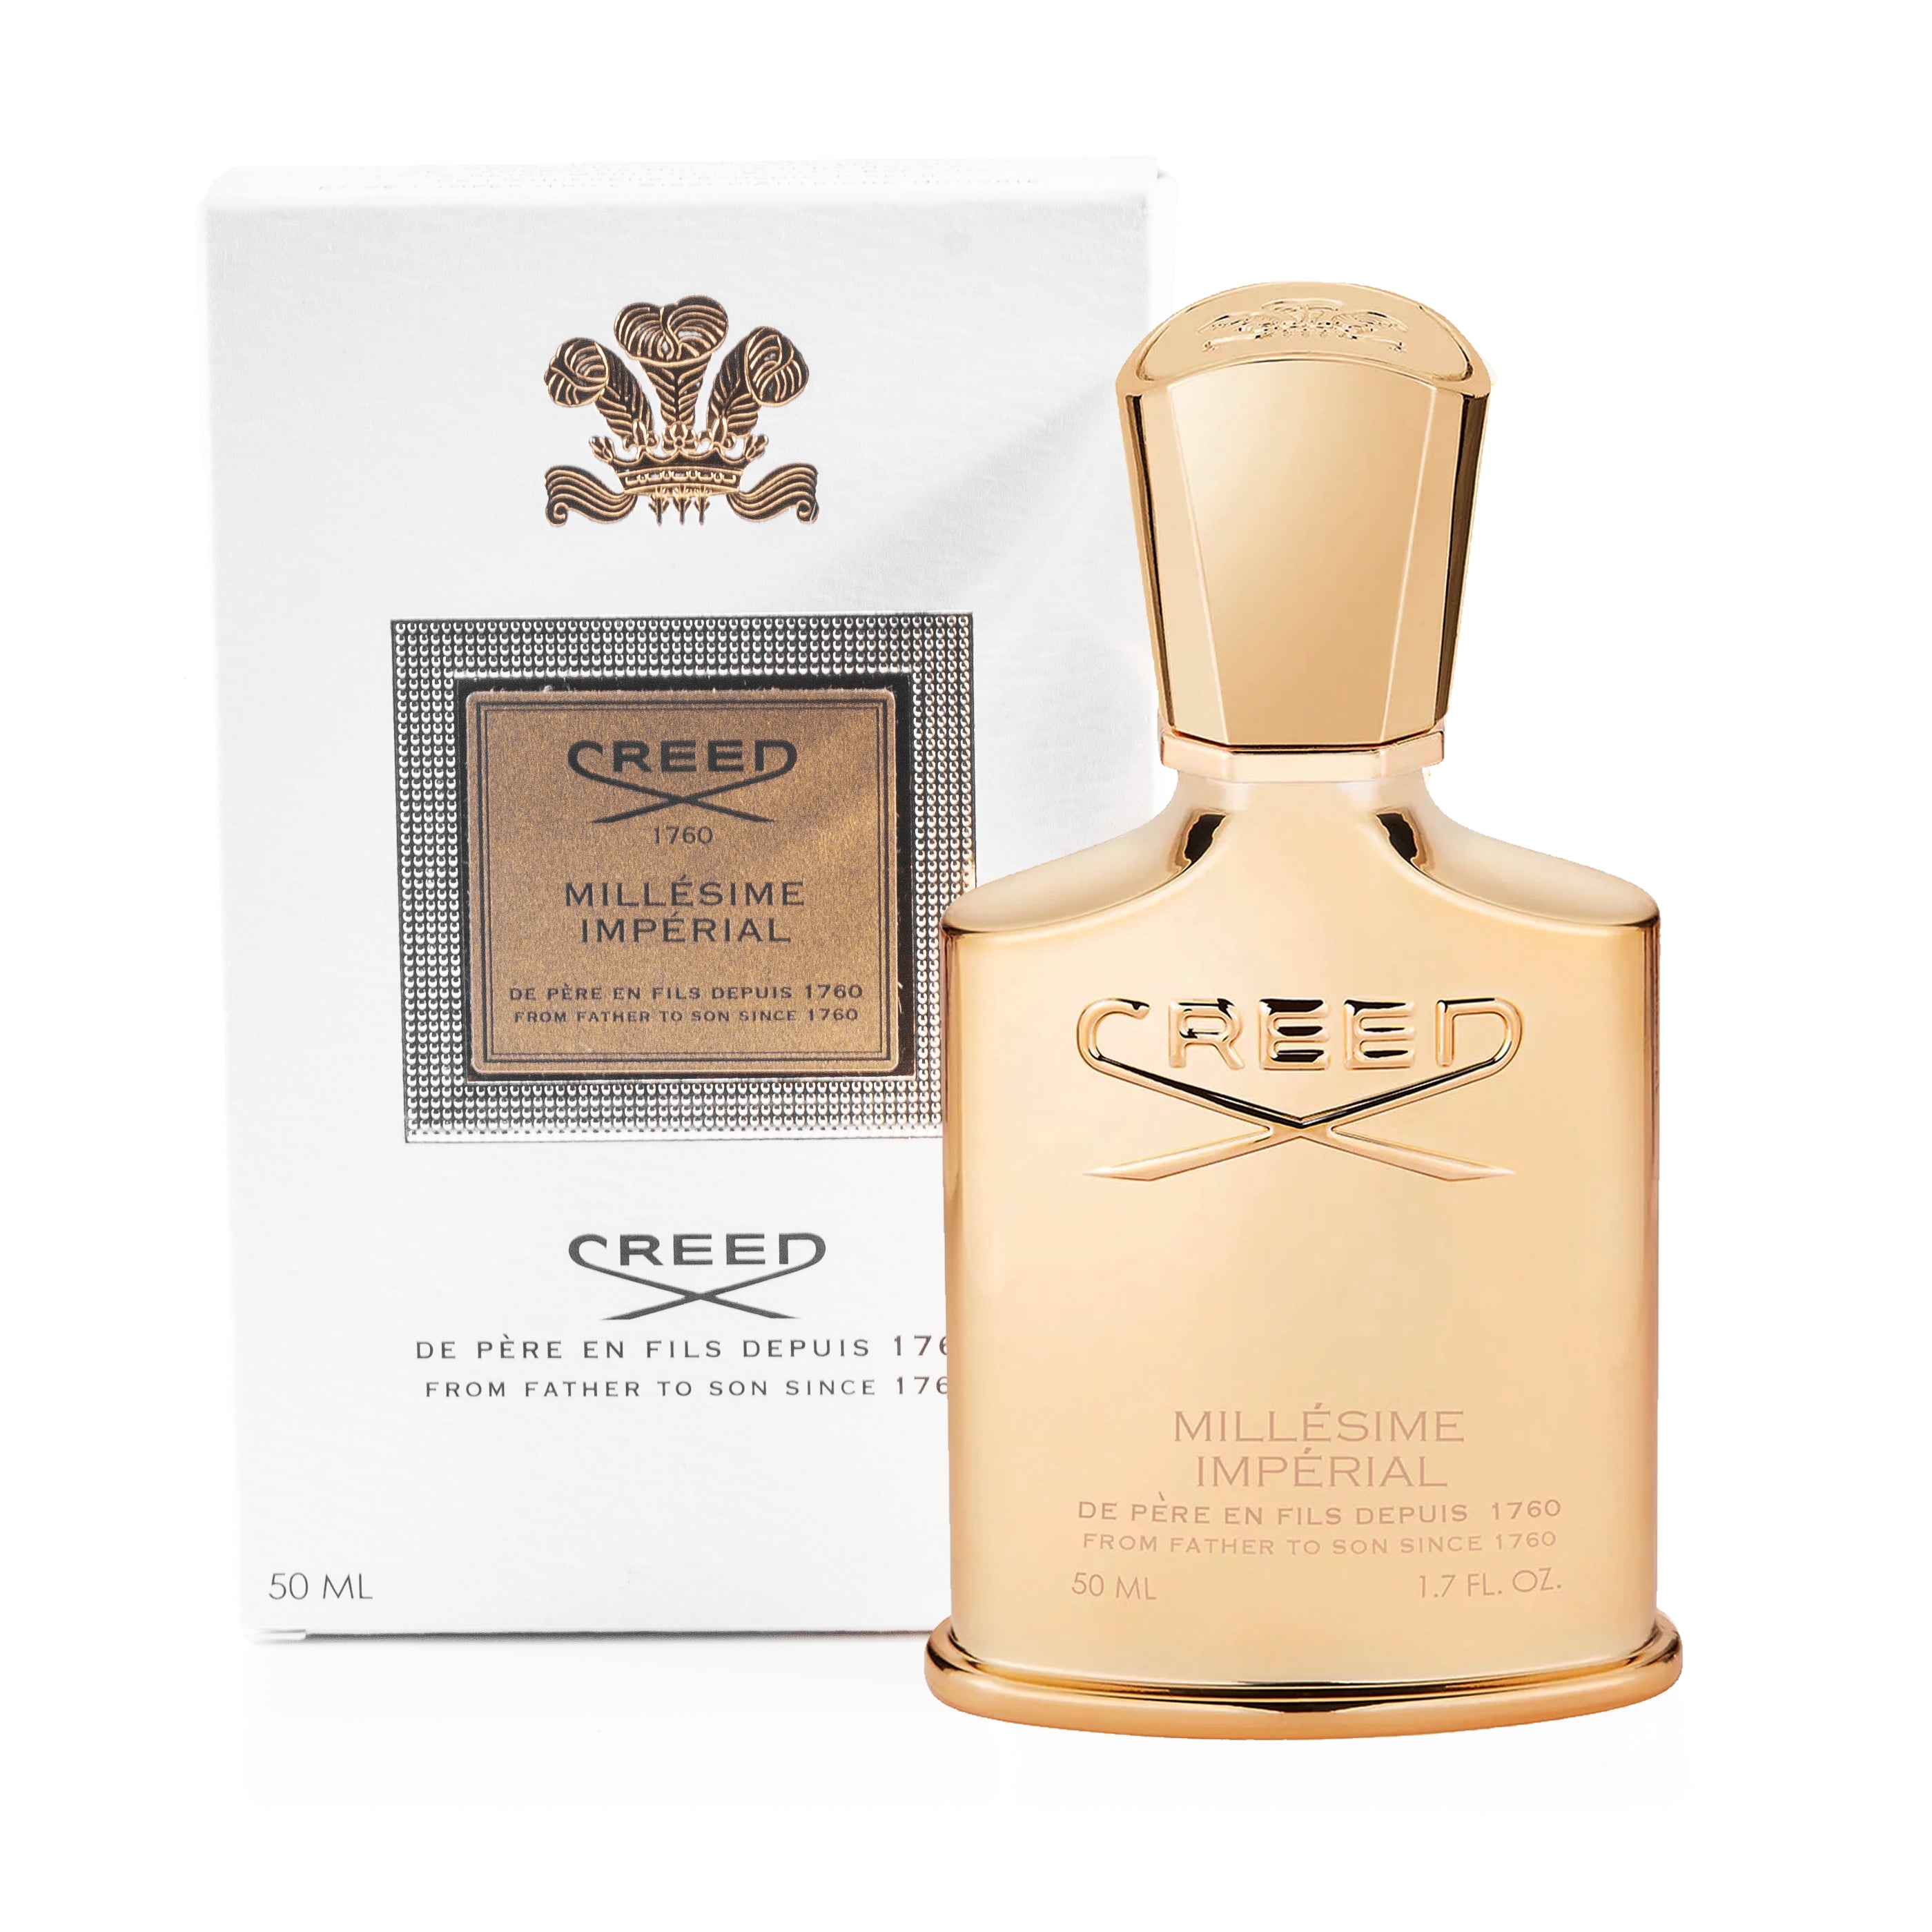 Creed Aventus Eau de Parfum Spray Men 1.7oz